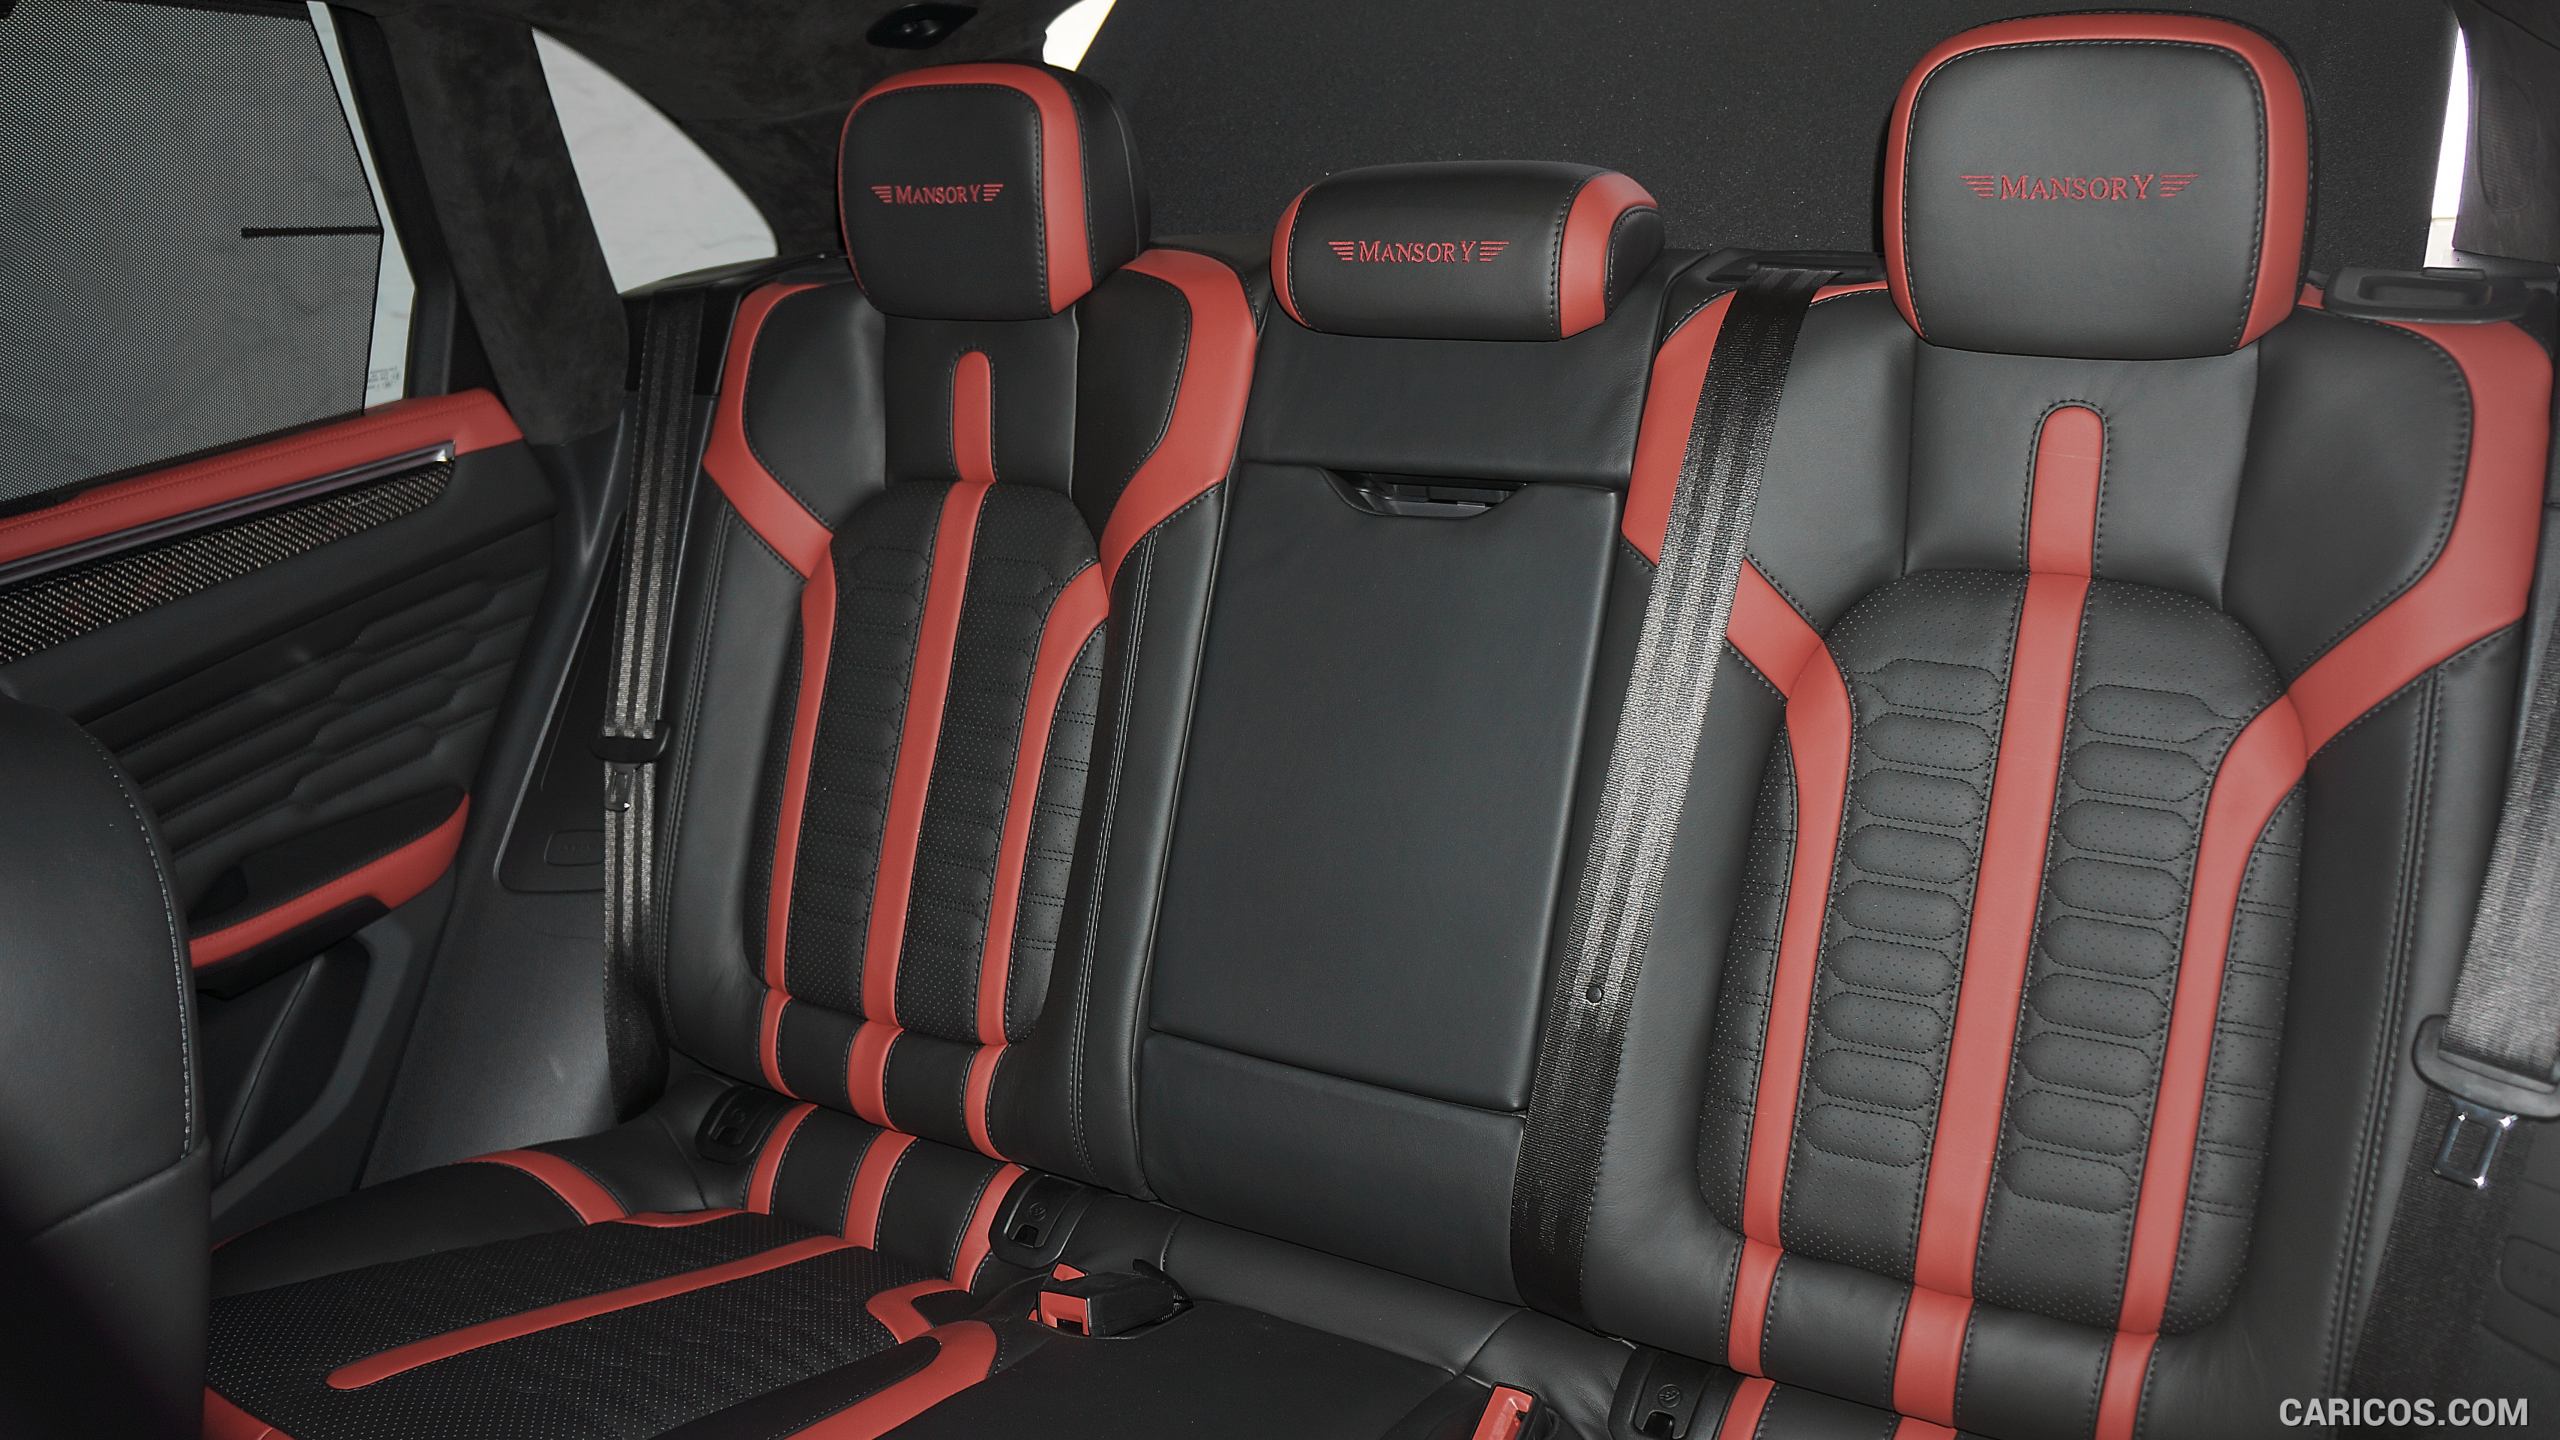 2015 MANSORY Porsche Macan - Interior Rear Seats, #10 of 10